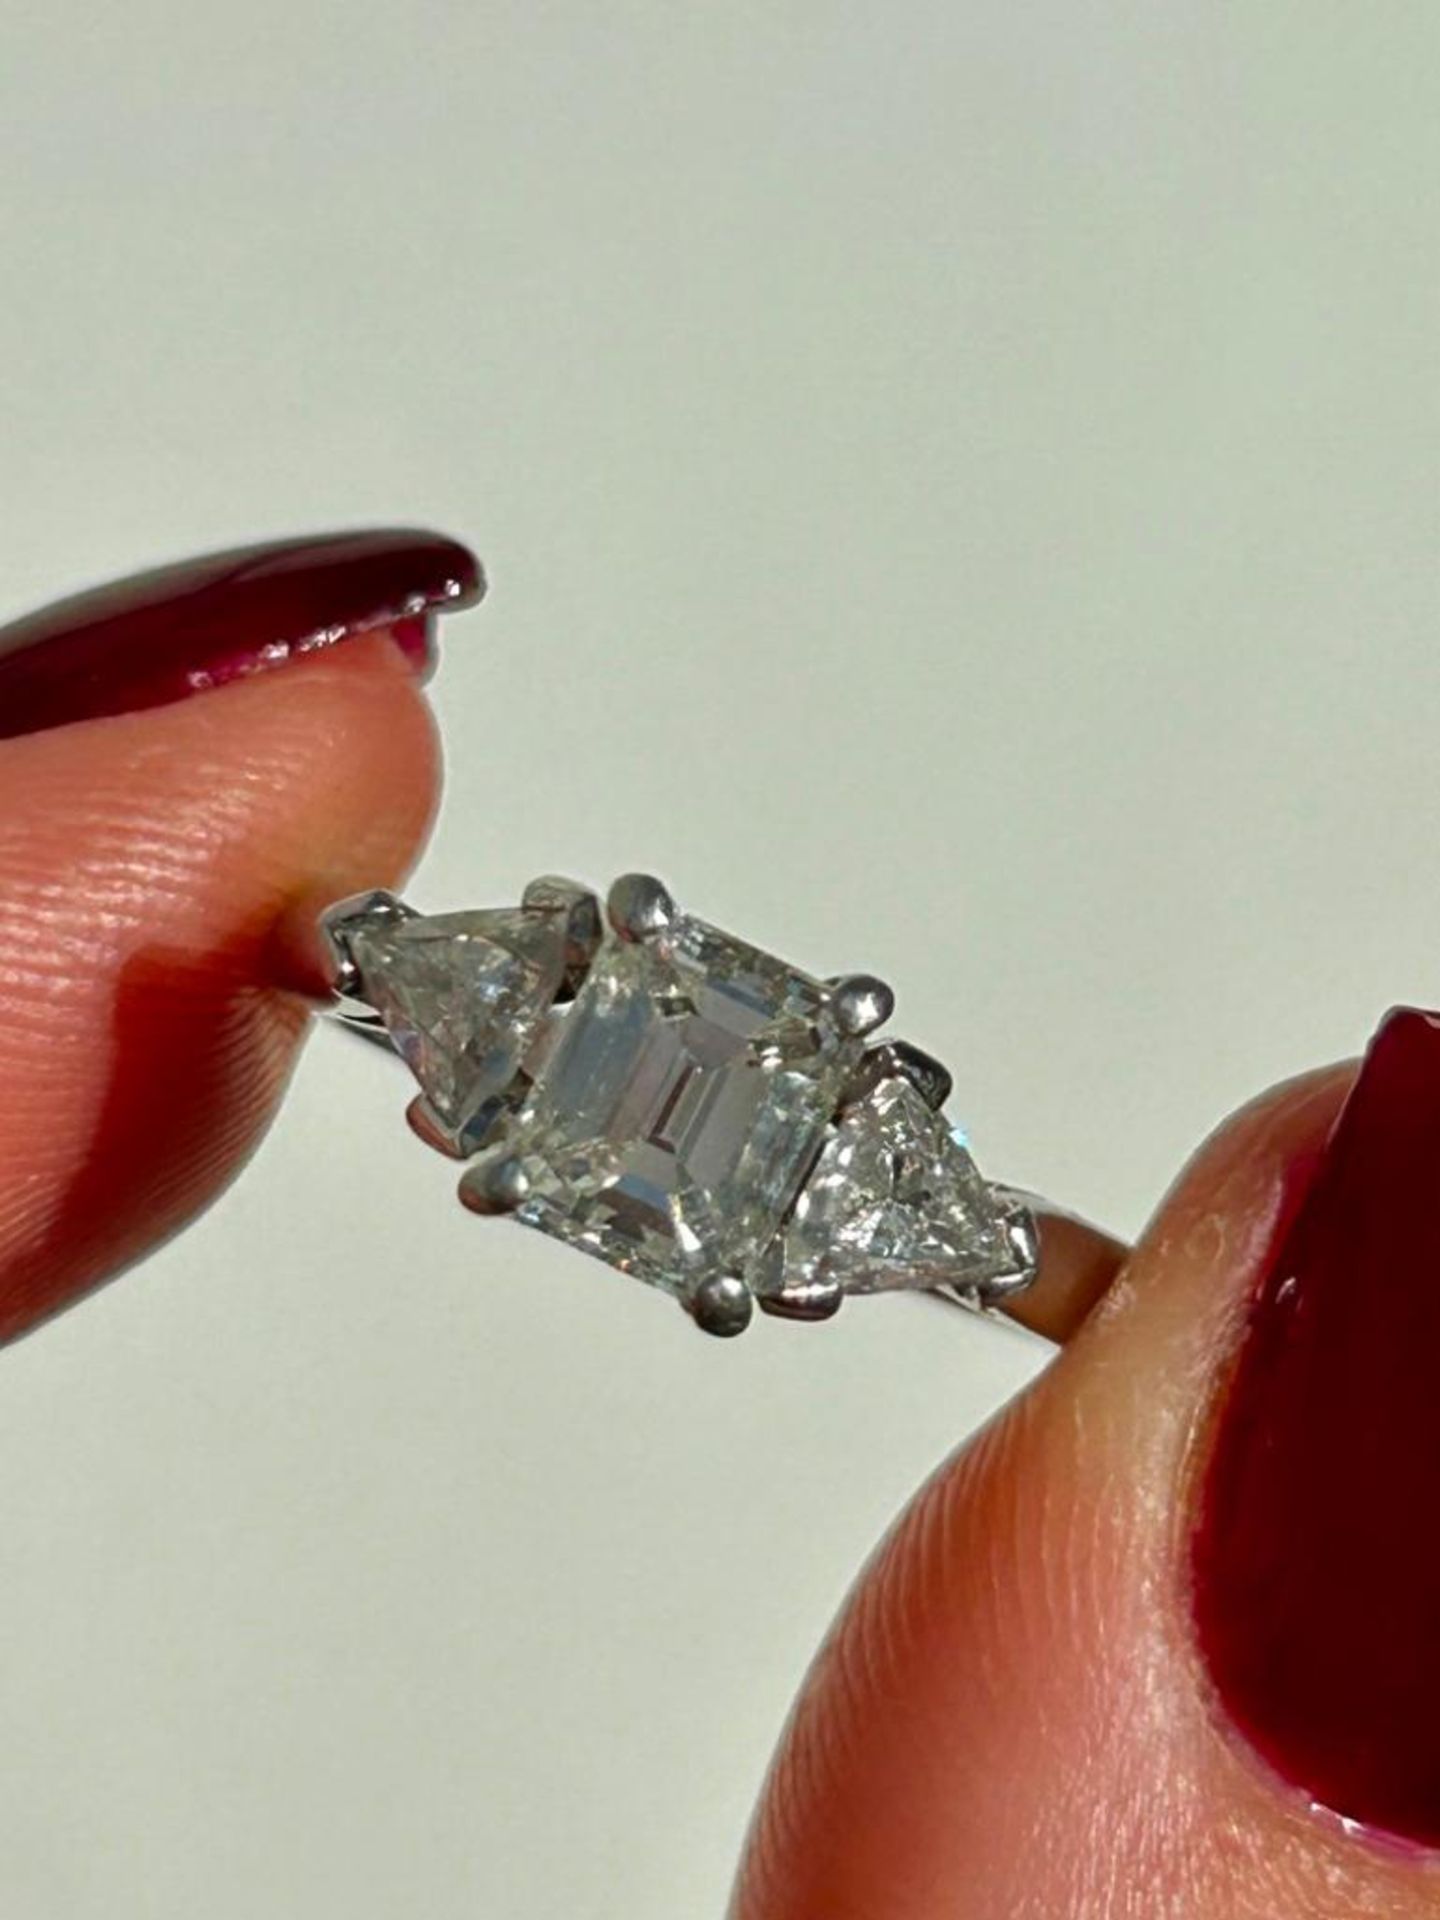 1.45 Carat Emerald Cut Diamond Ring Set in Platinum with Certificate - Image 7 of 9